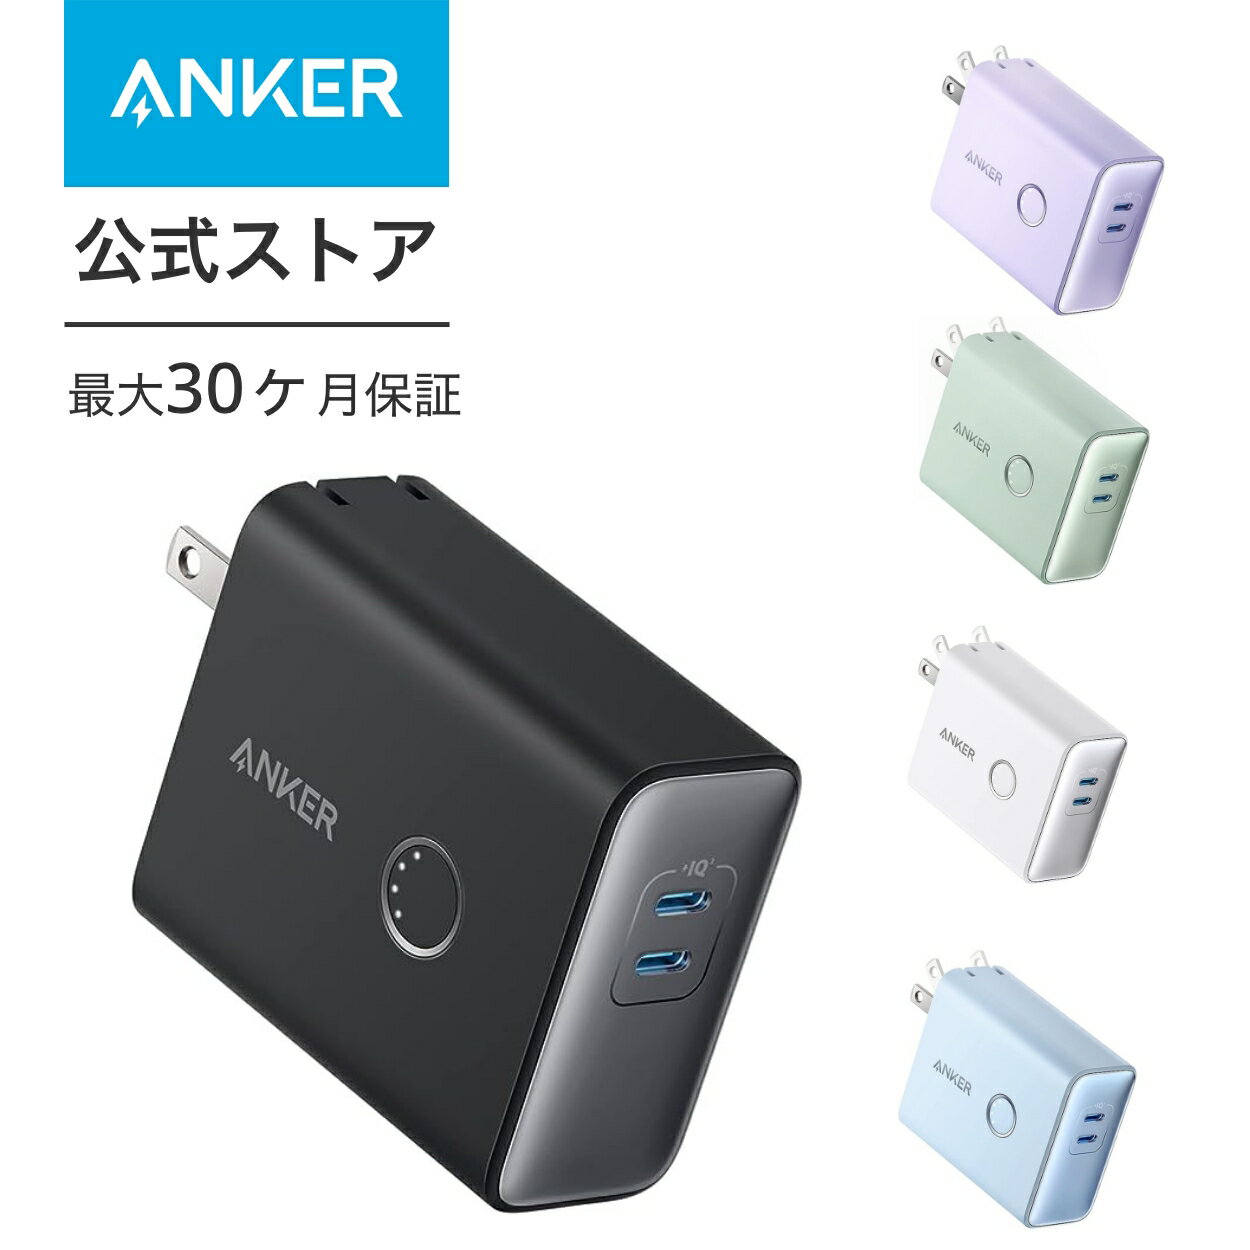 【20 OFF 5/16まで】【一部あす楽対応】Anker 521 Power Bank (PowerCore Fusion, 45W) (5000mAh 20W出力モバイルバッテリー搭載 45W出力USB充電器)【コンセント 一体型 / PSE認証済 / PowerIQ 3.0 (Gen2) 搭載 / USB PD対応 / 折りたたみ式プラグ】